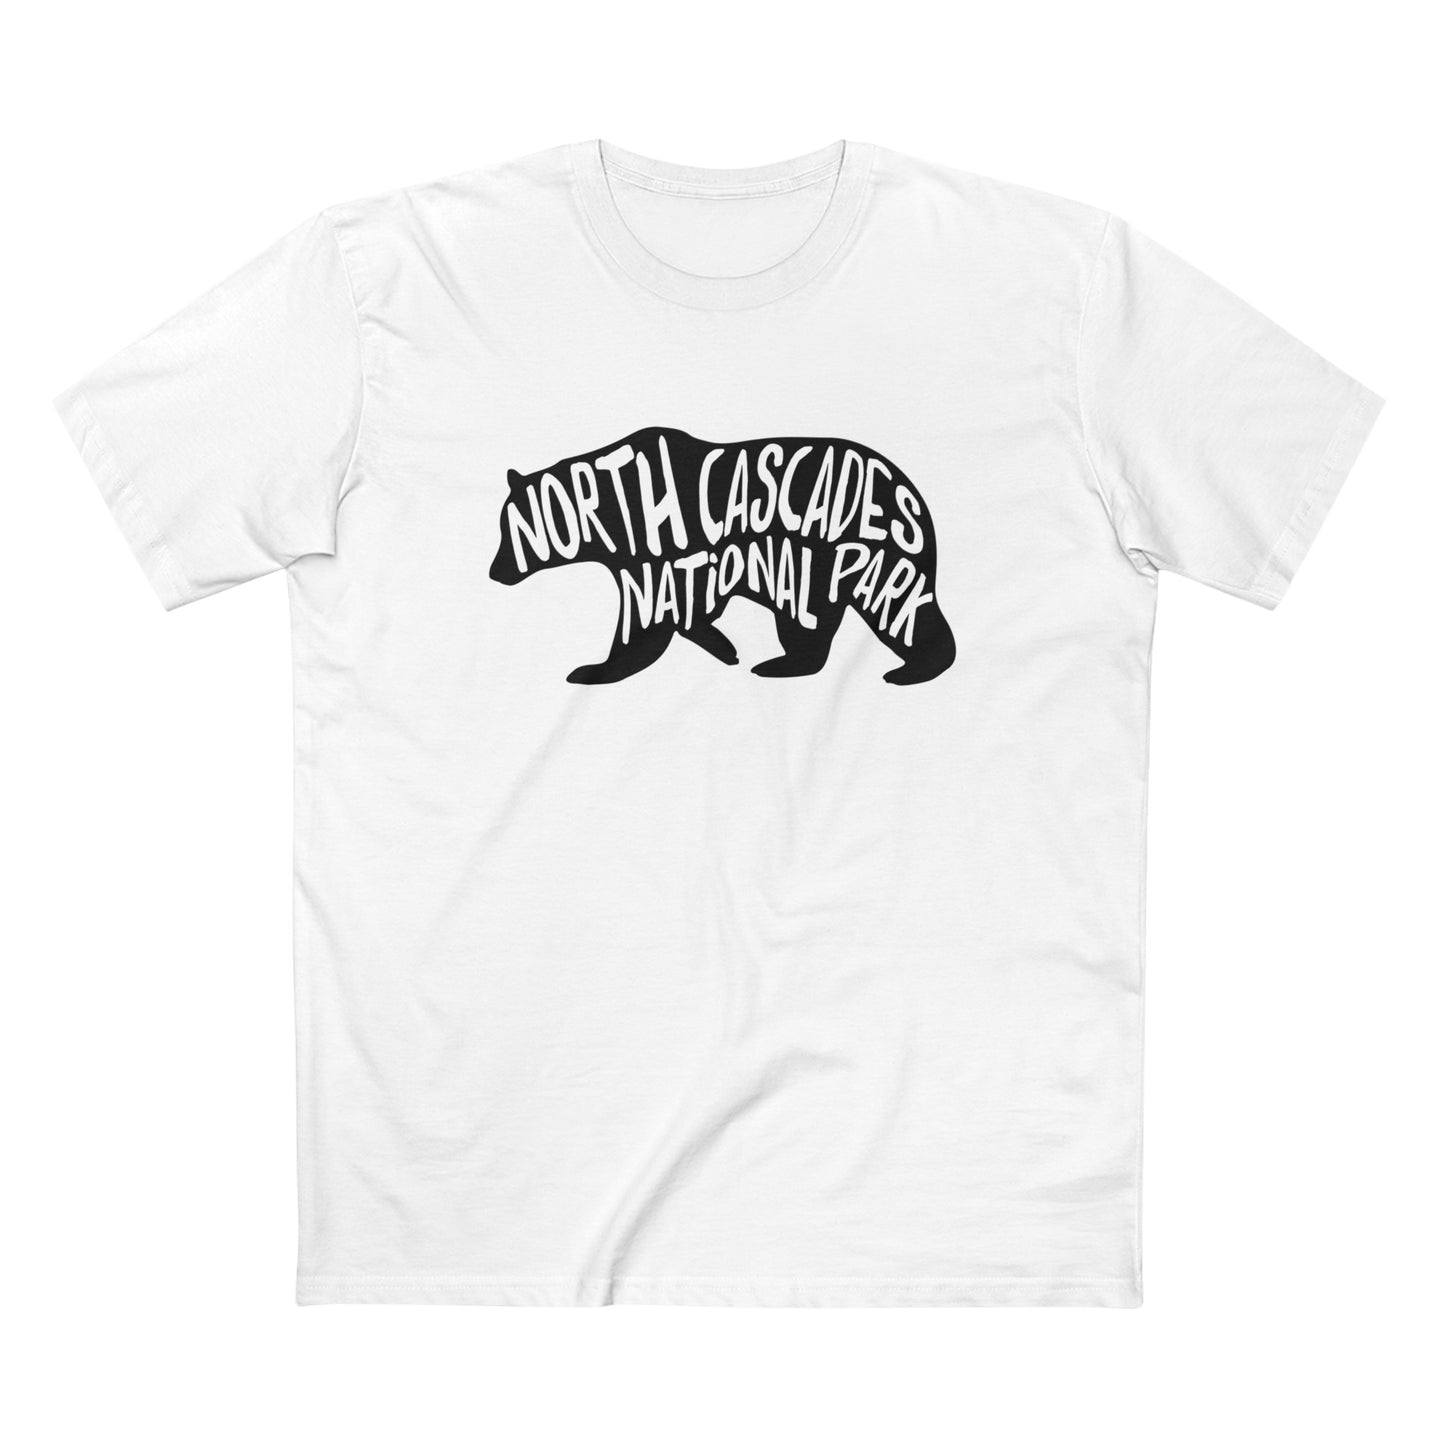 North Cascades National Park T-Shirt - Black Bear